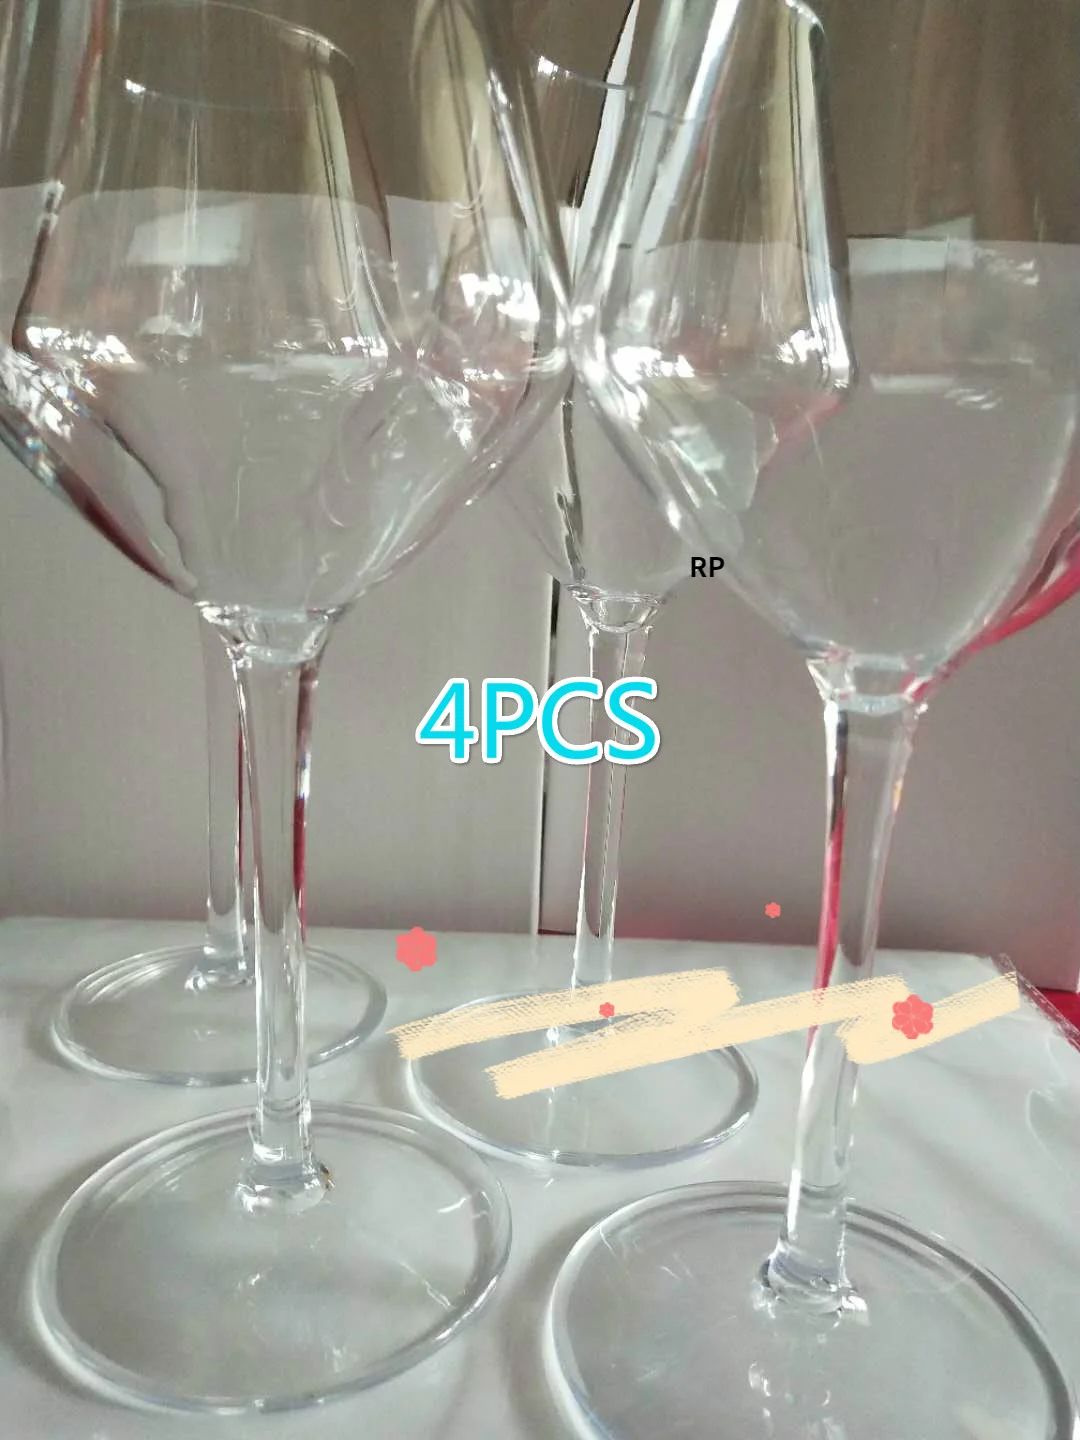 4 PCS-401-500 ml